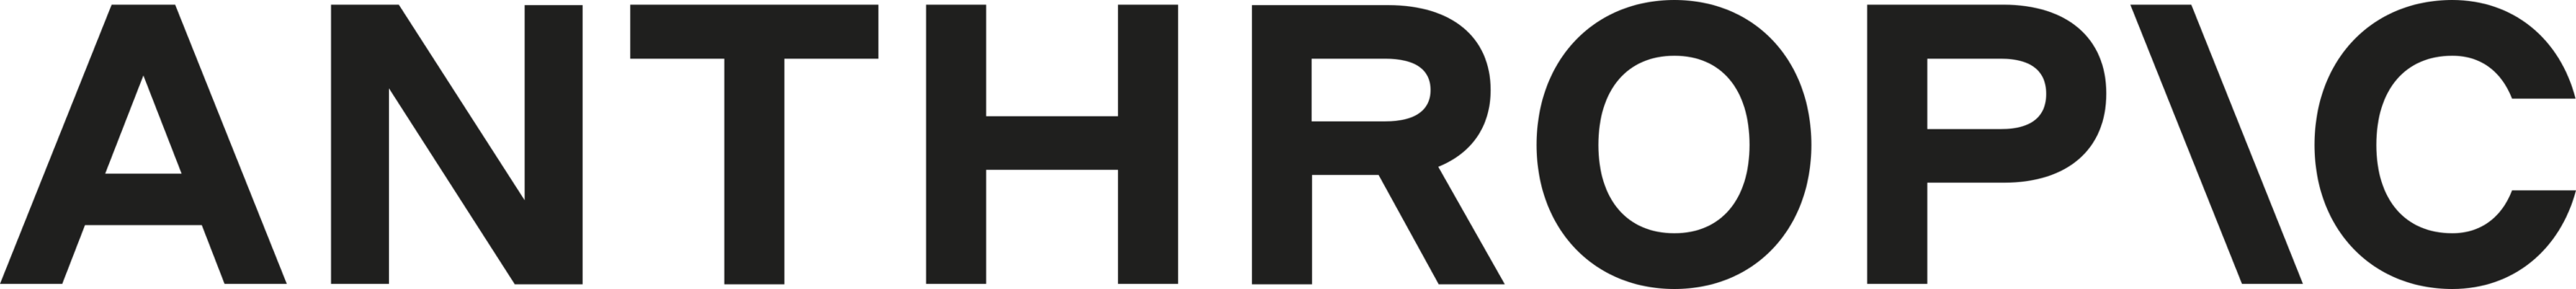 Anthropic AI Logo